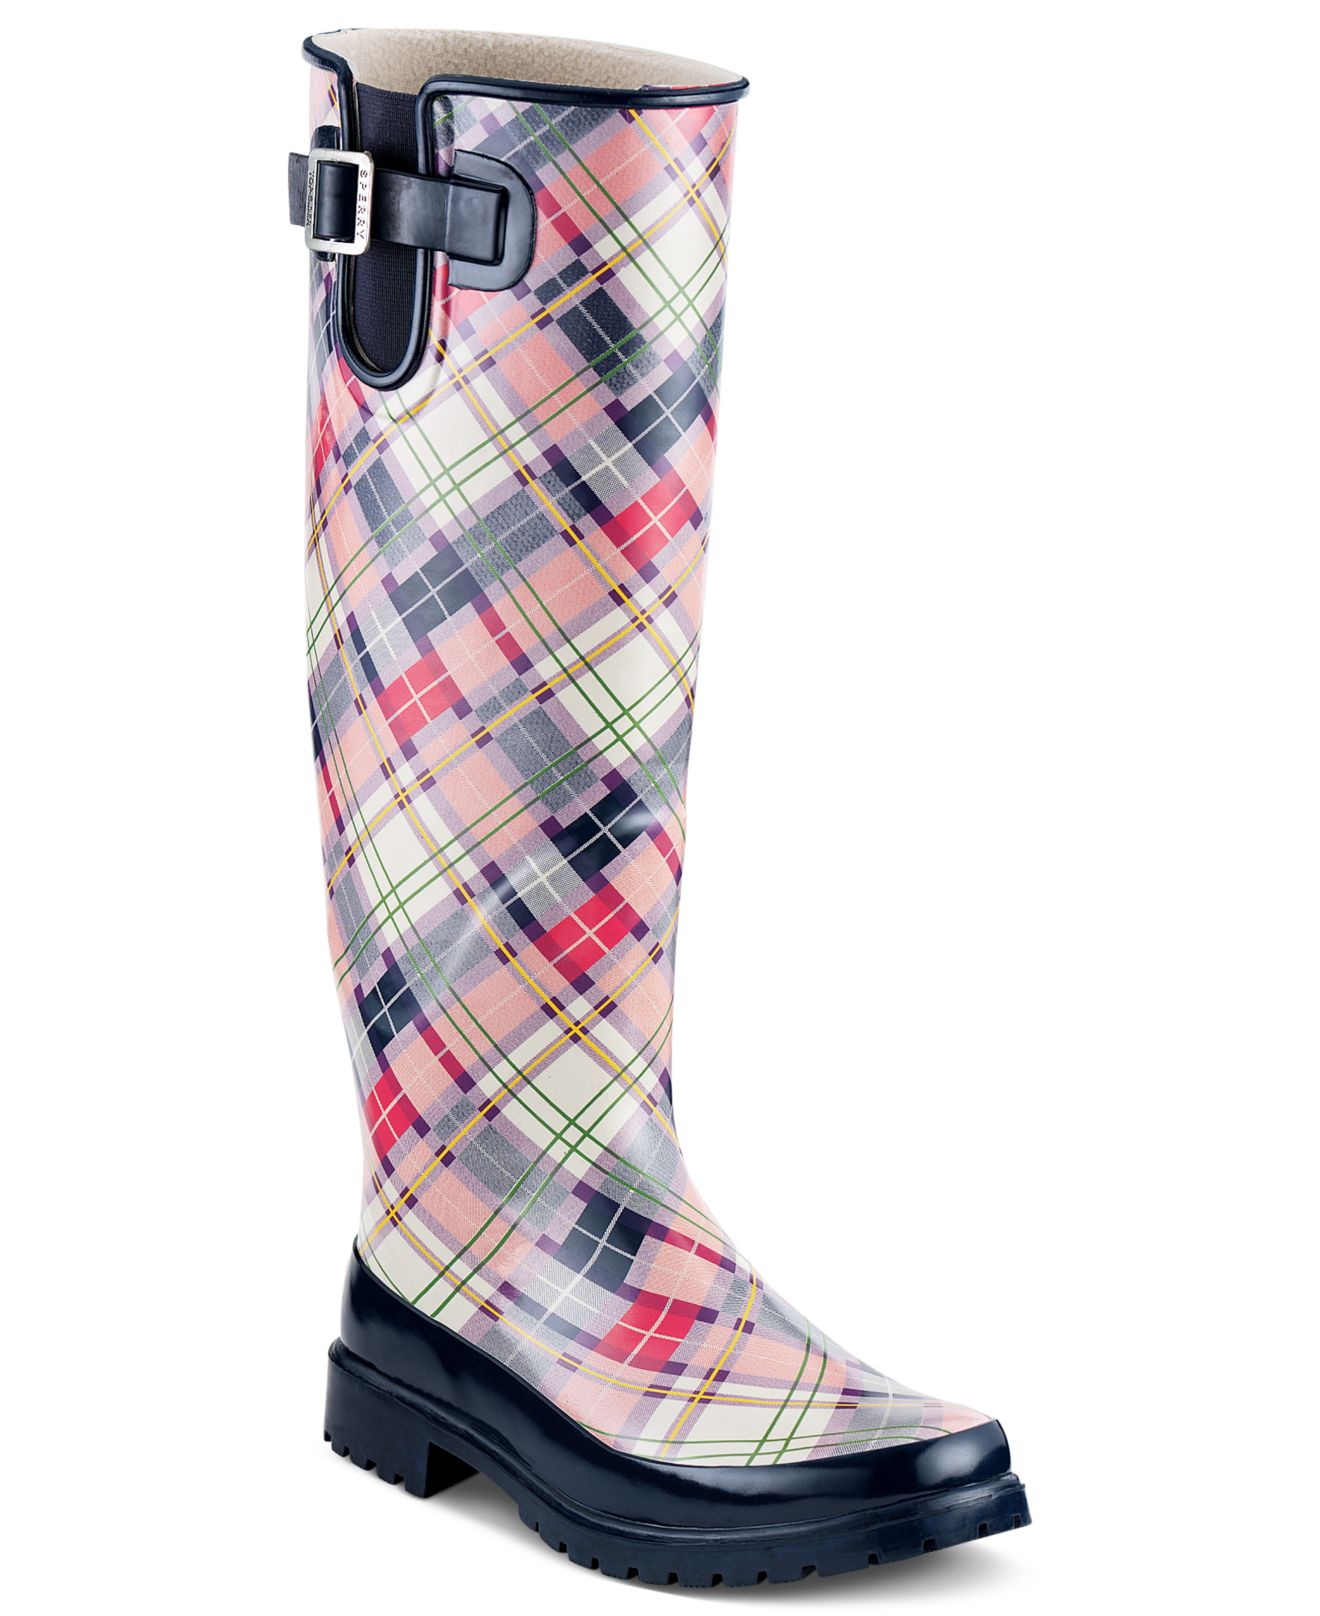 sperry tall rain boots